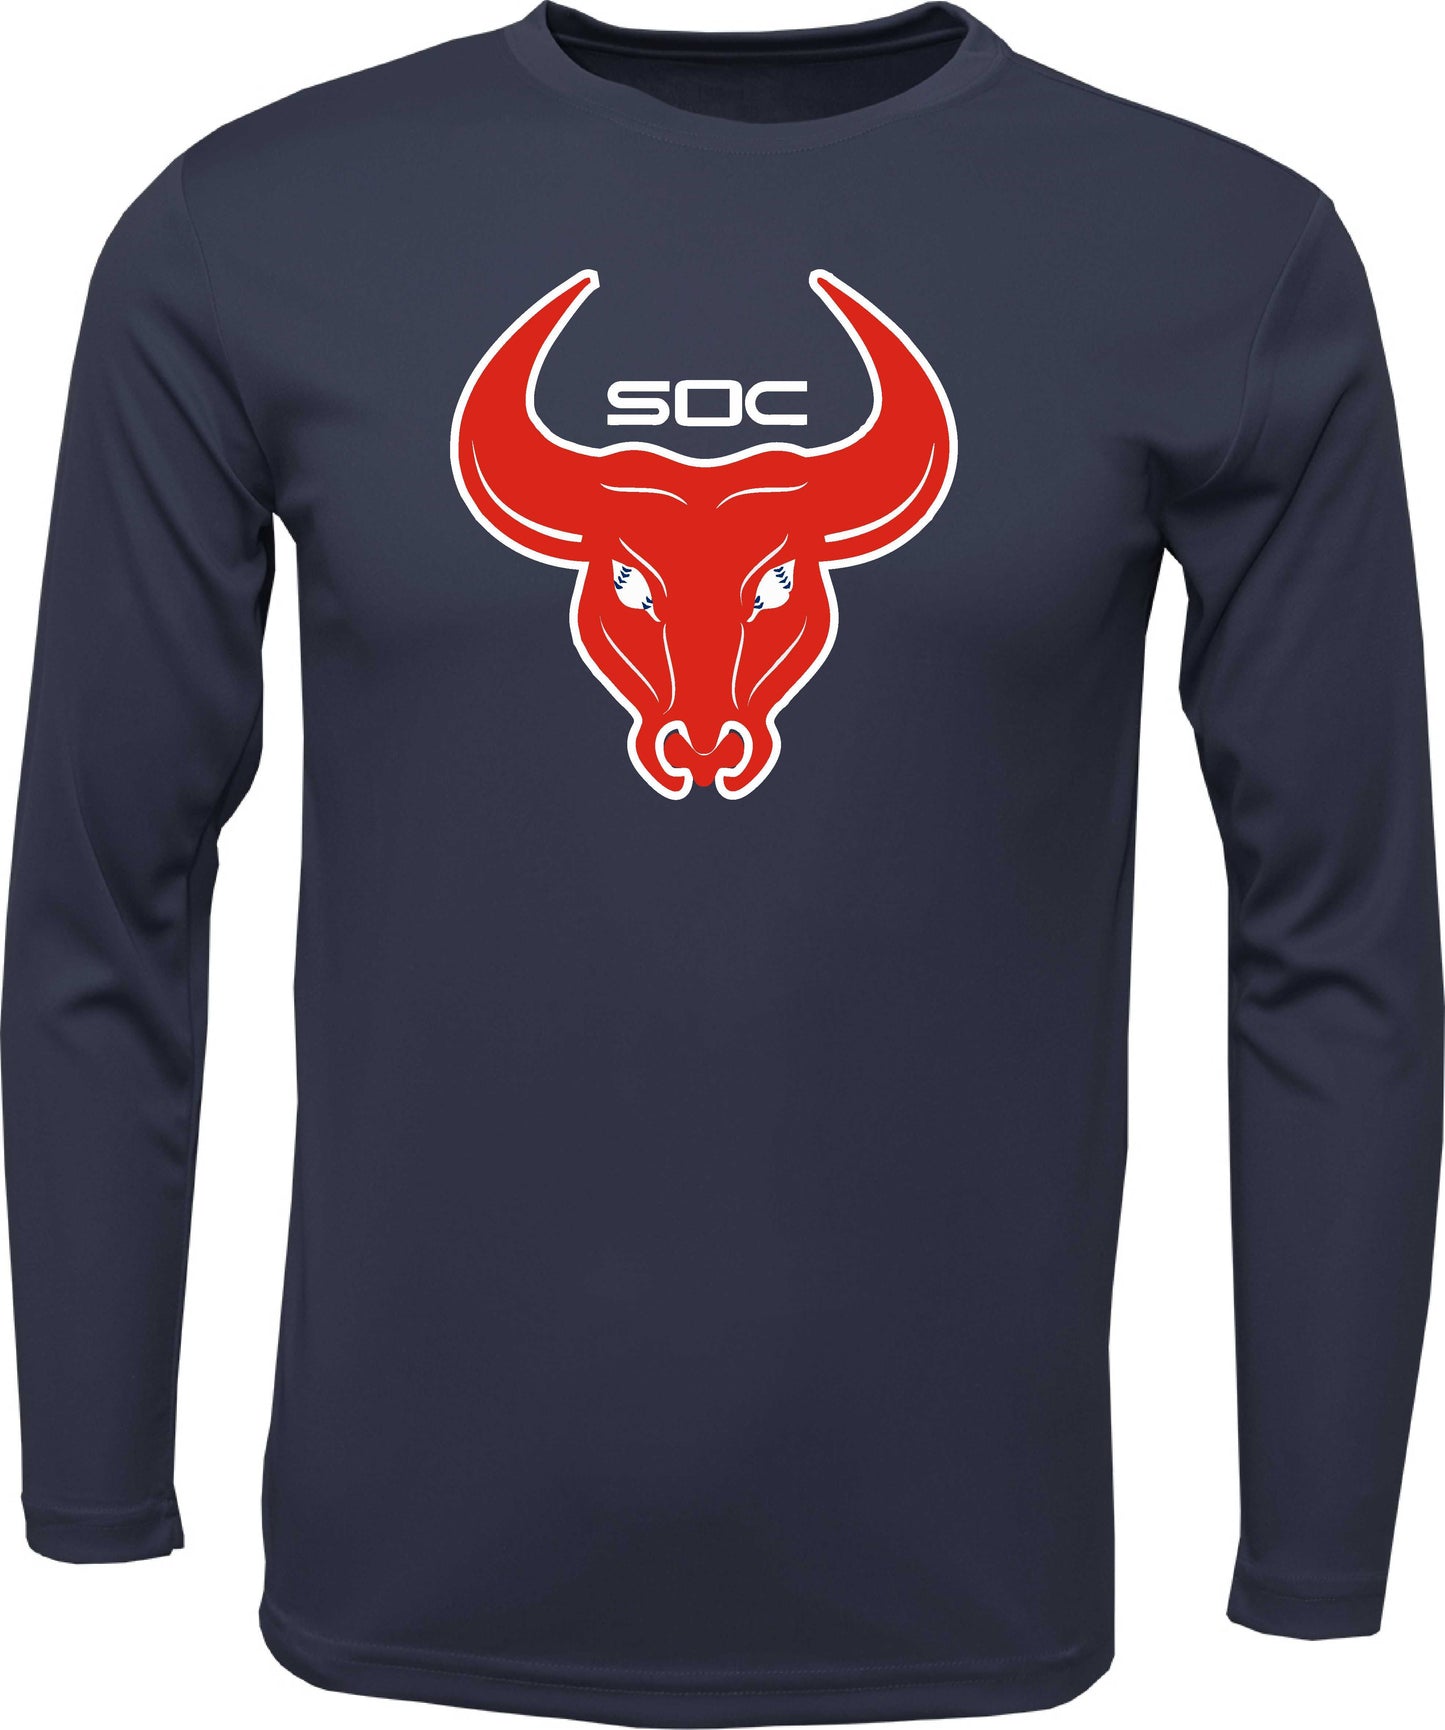 SC Long-sleeve "Bull Logo" Cotton T-shirt